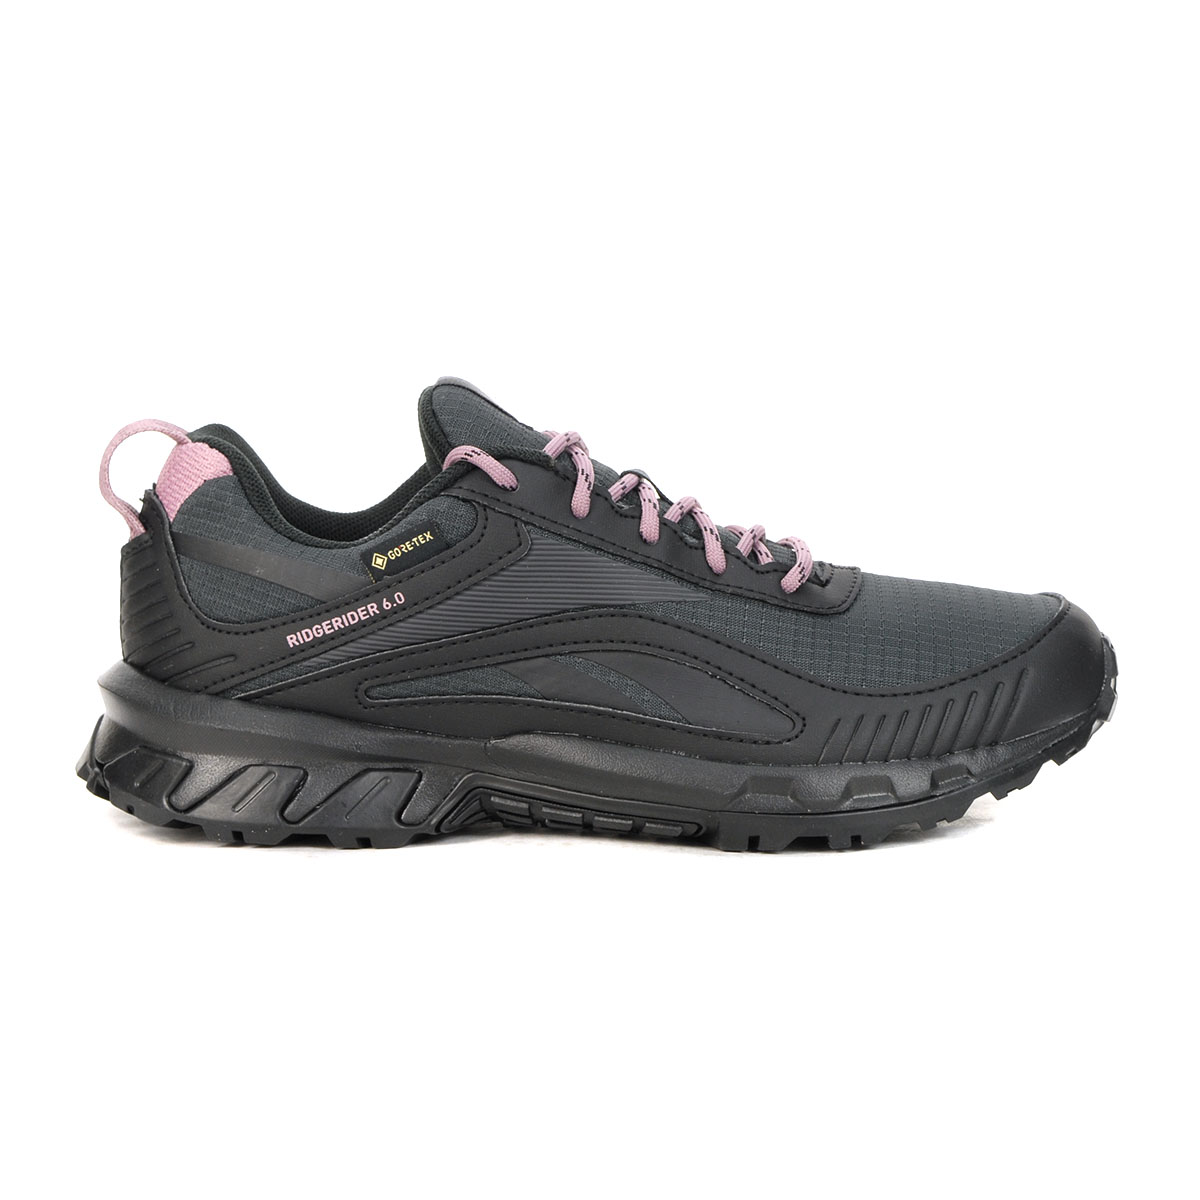 Reebok Women's Ridgerider 6 GTX Core Black/Infused Lilac Trail Shoes 